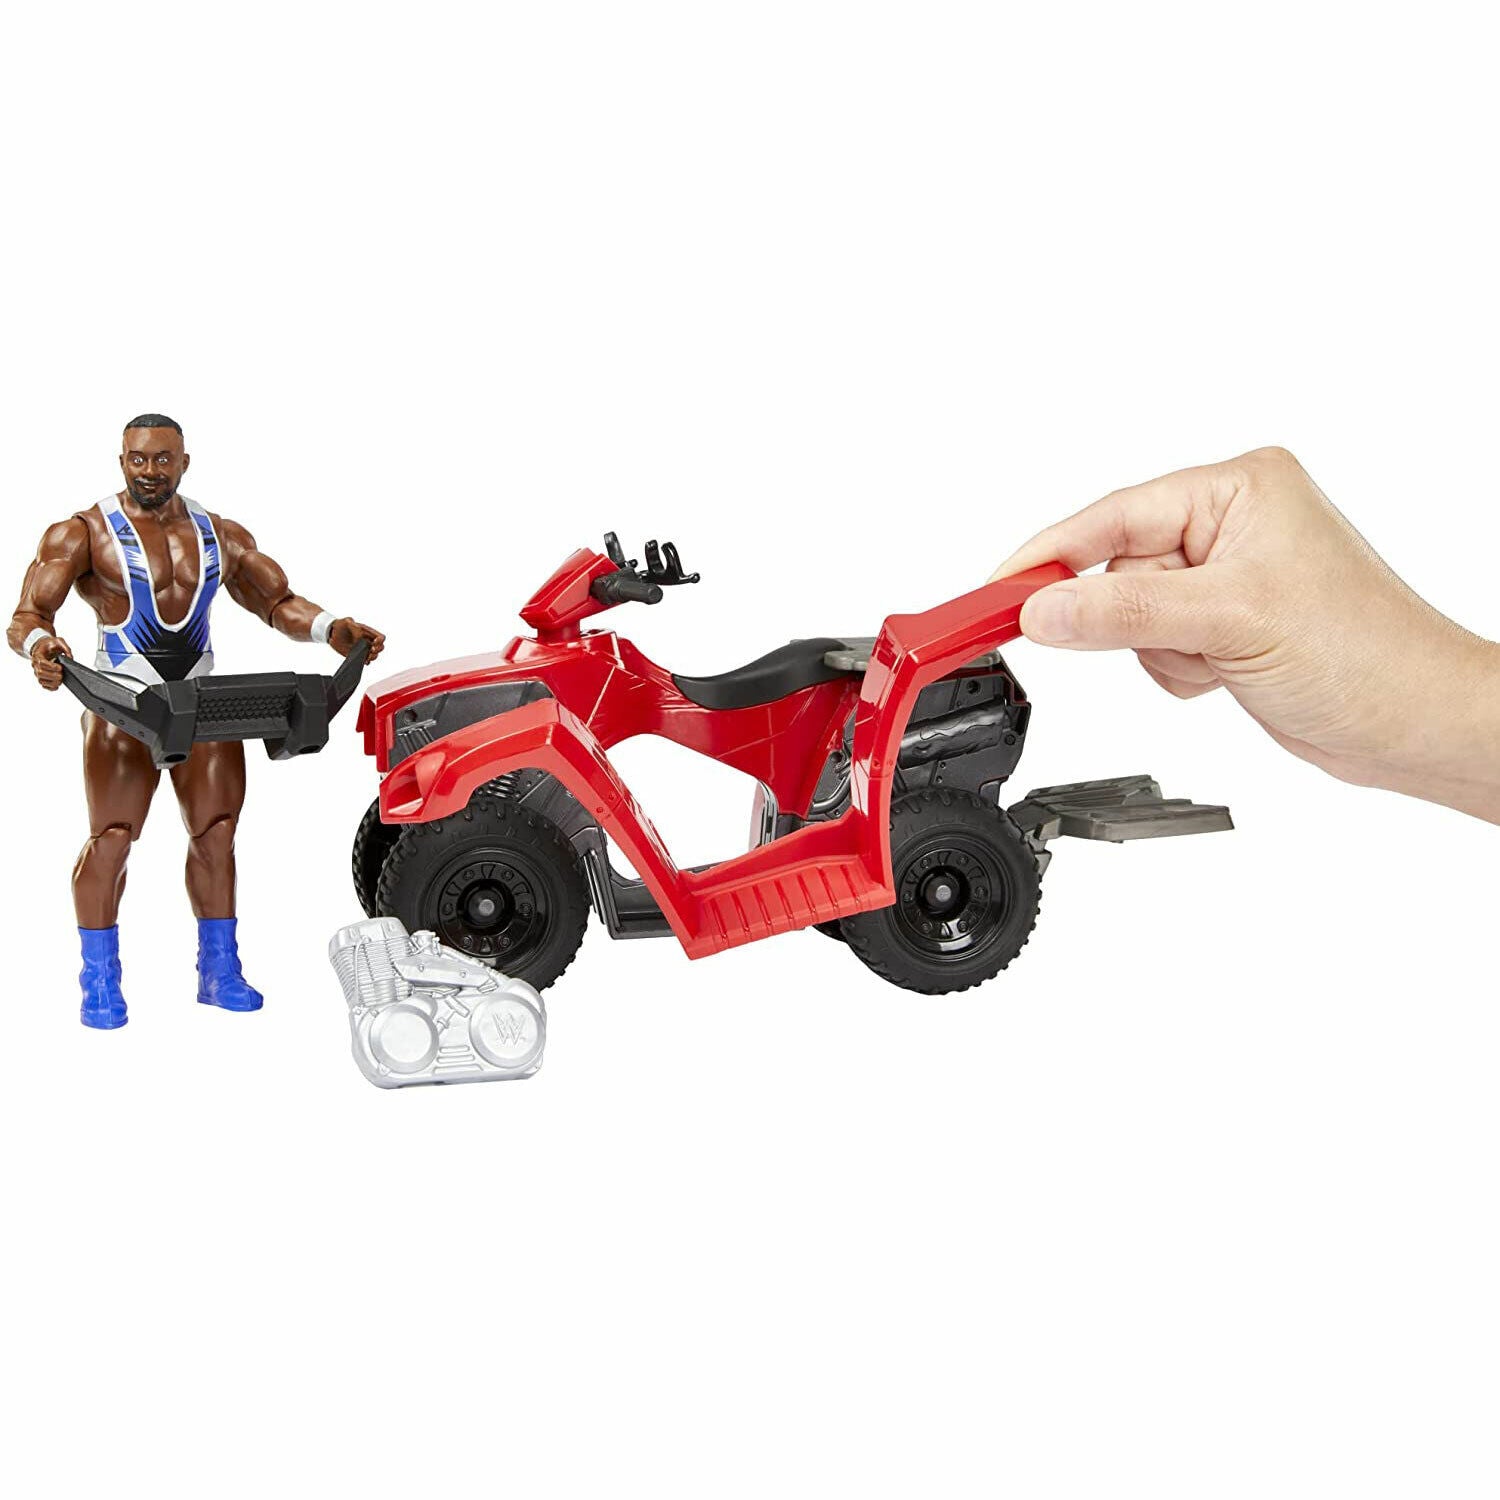 WWE Wrekkin' Slam 'N Spin ATV with Big E Figure - NEW!